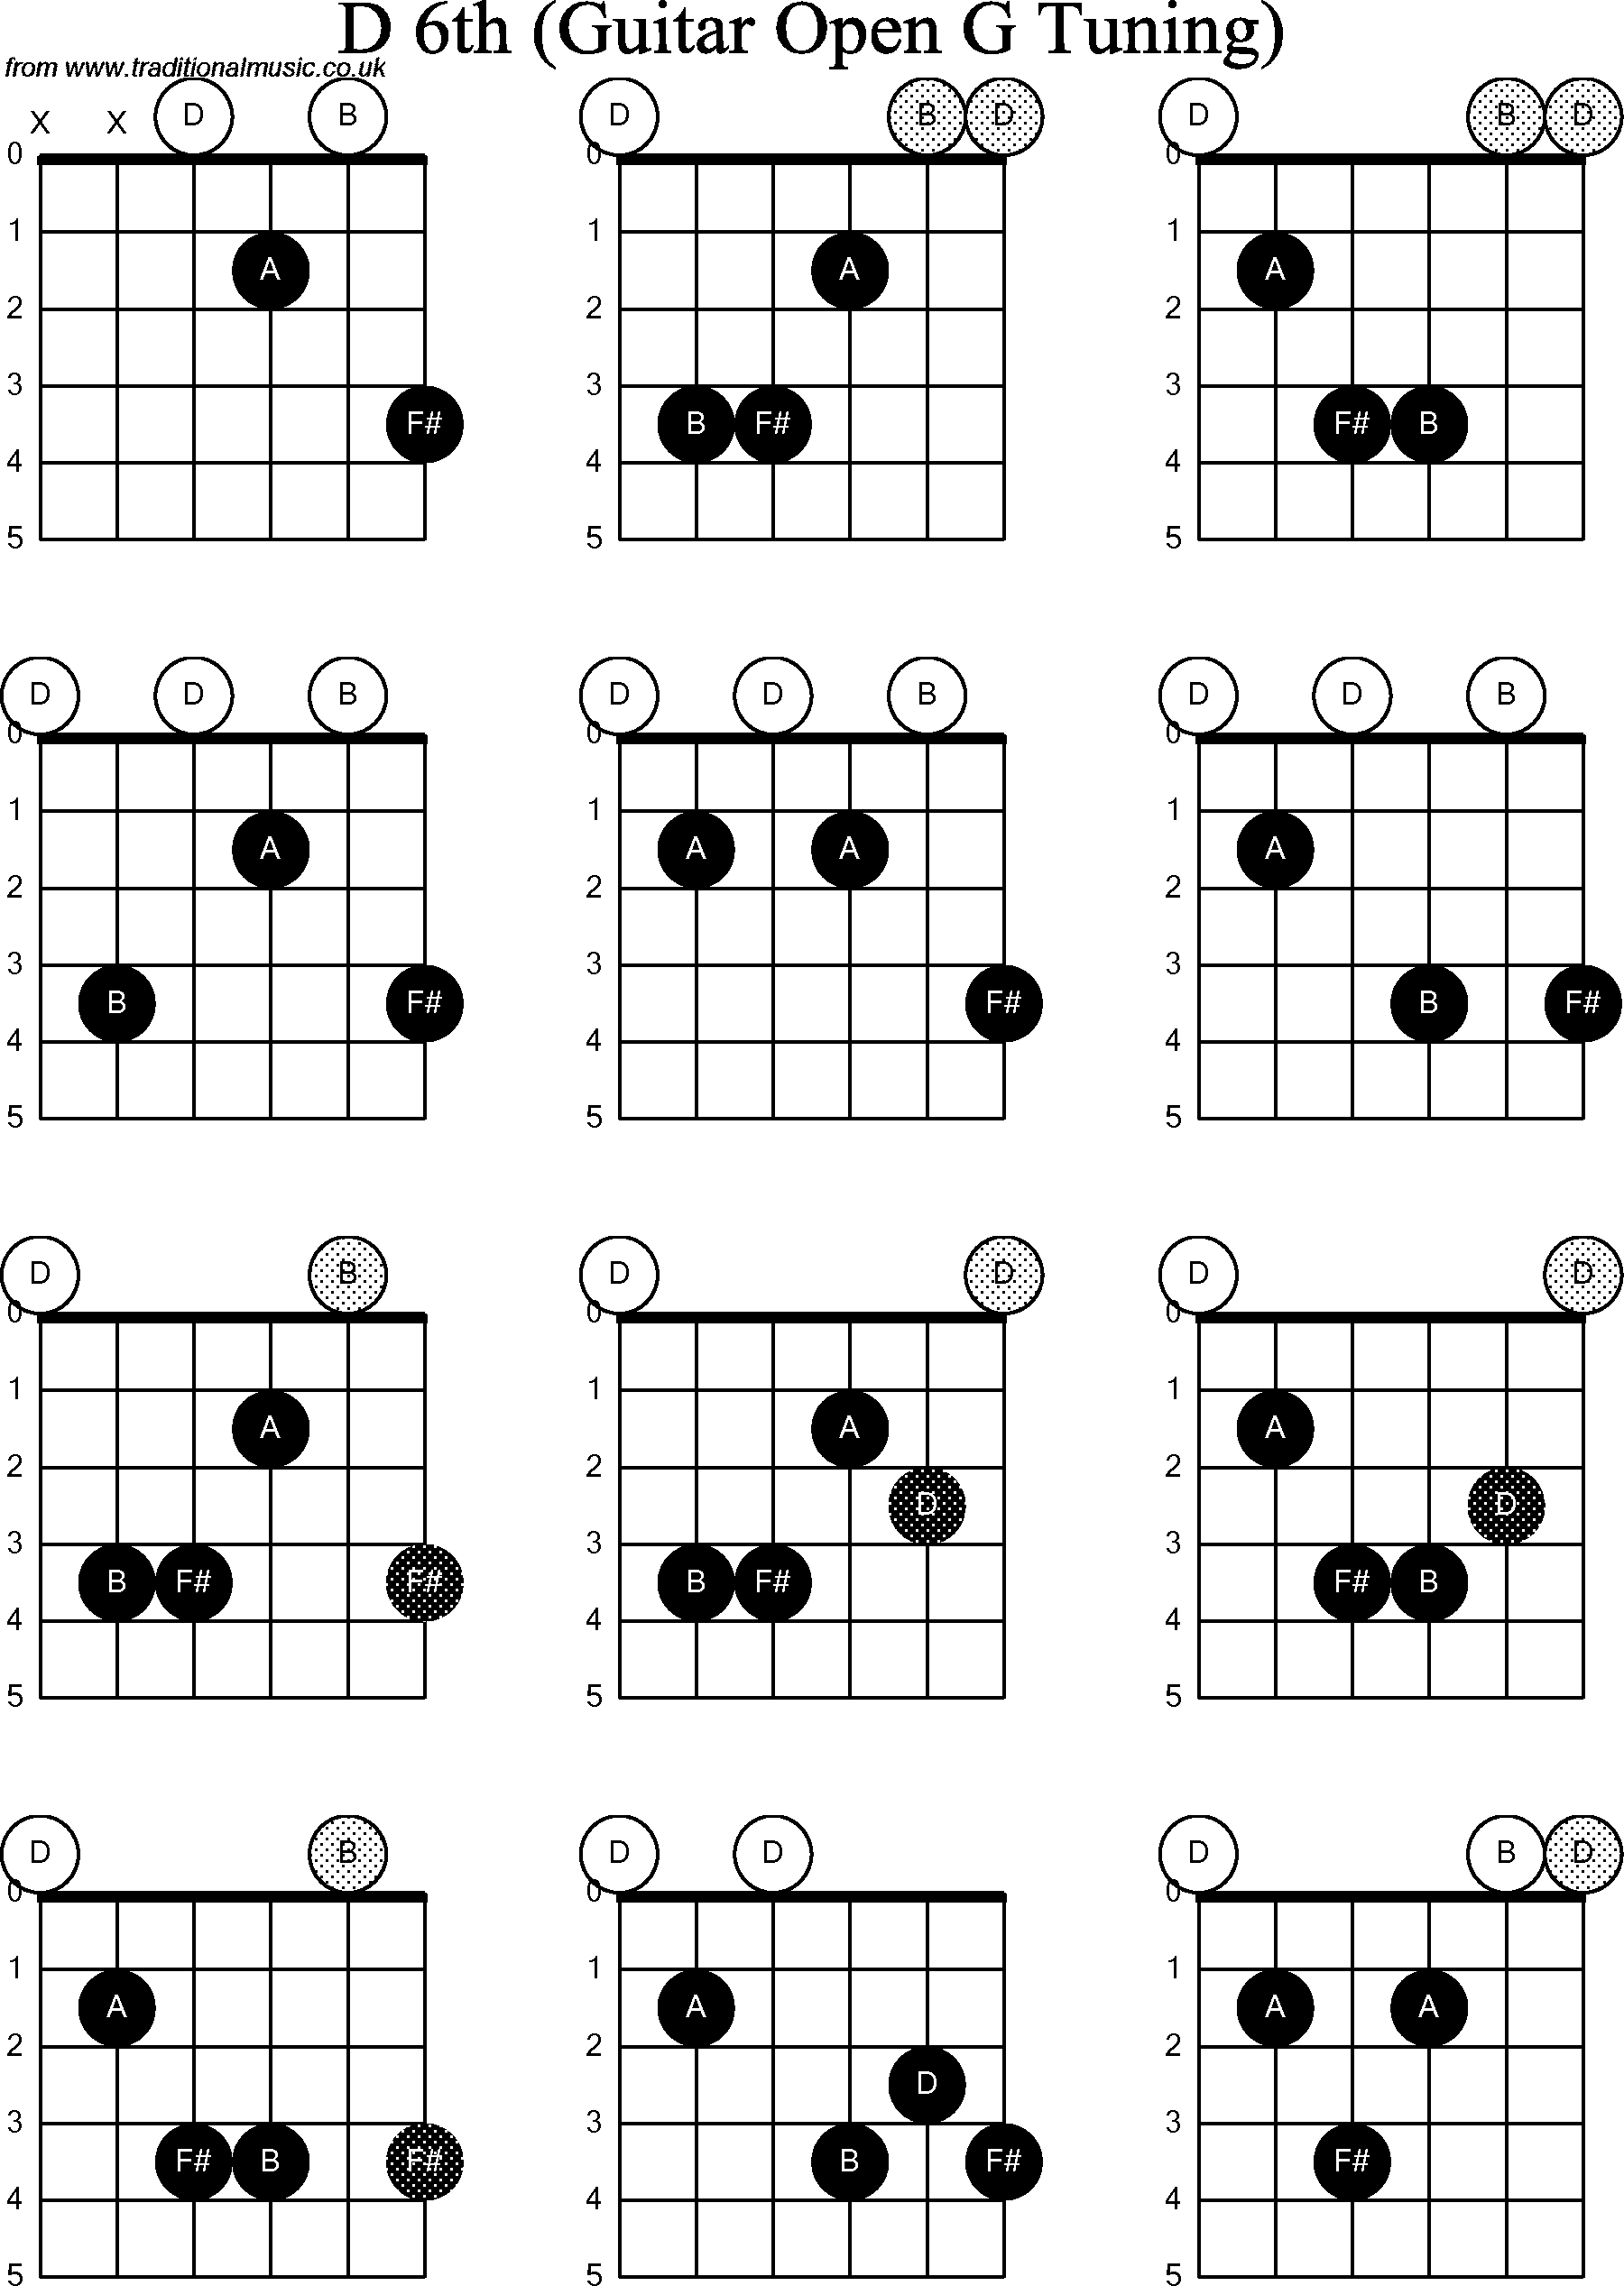 Chord diagrams for Dobro D6th